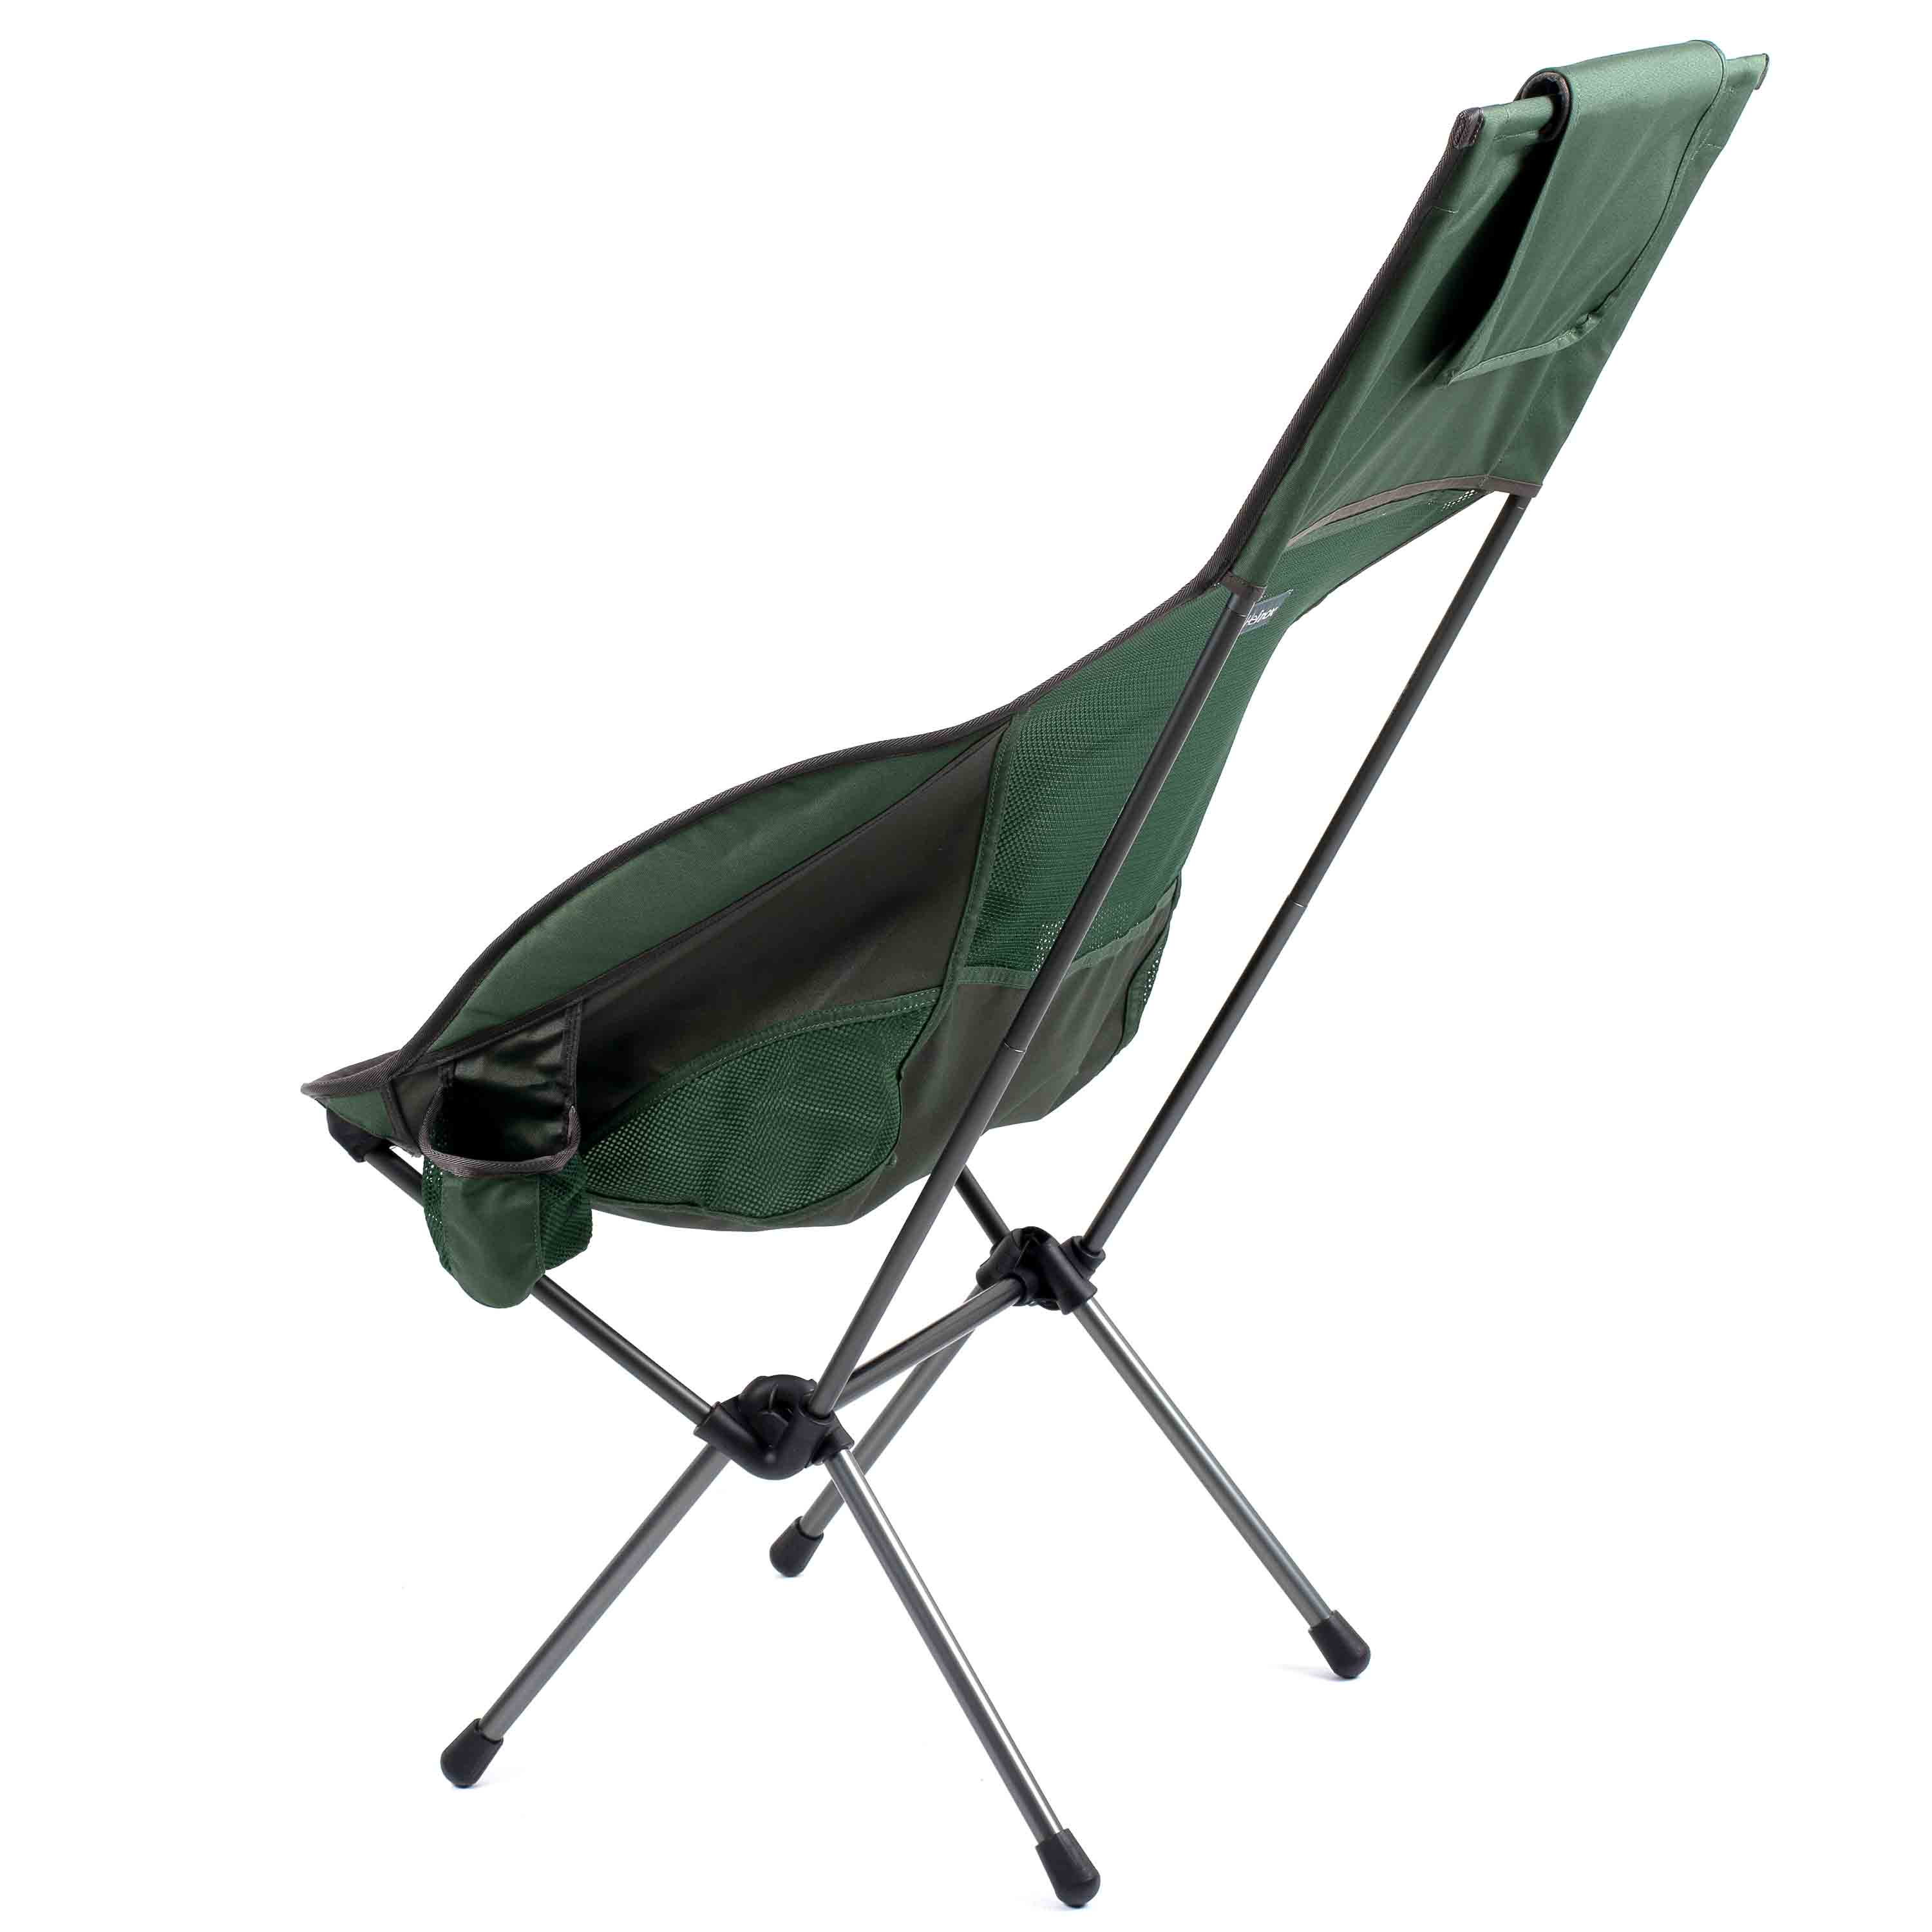 Campingstuhl Savanna Chair